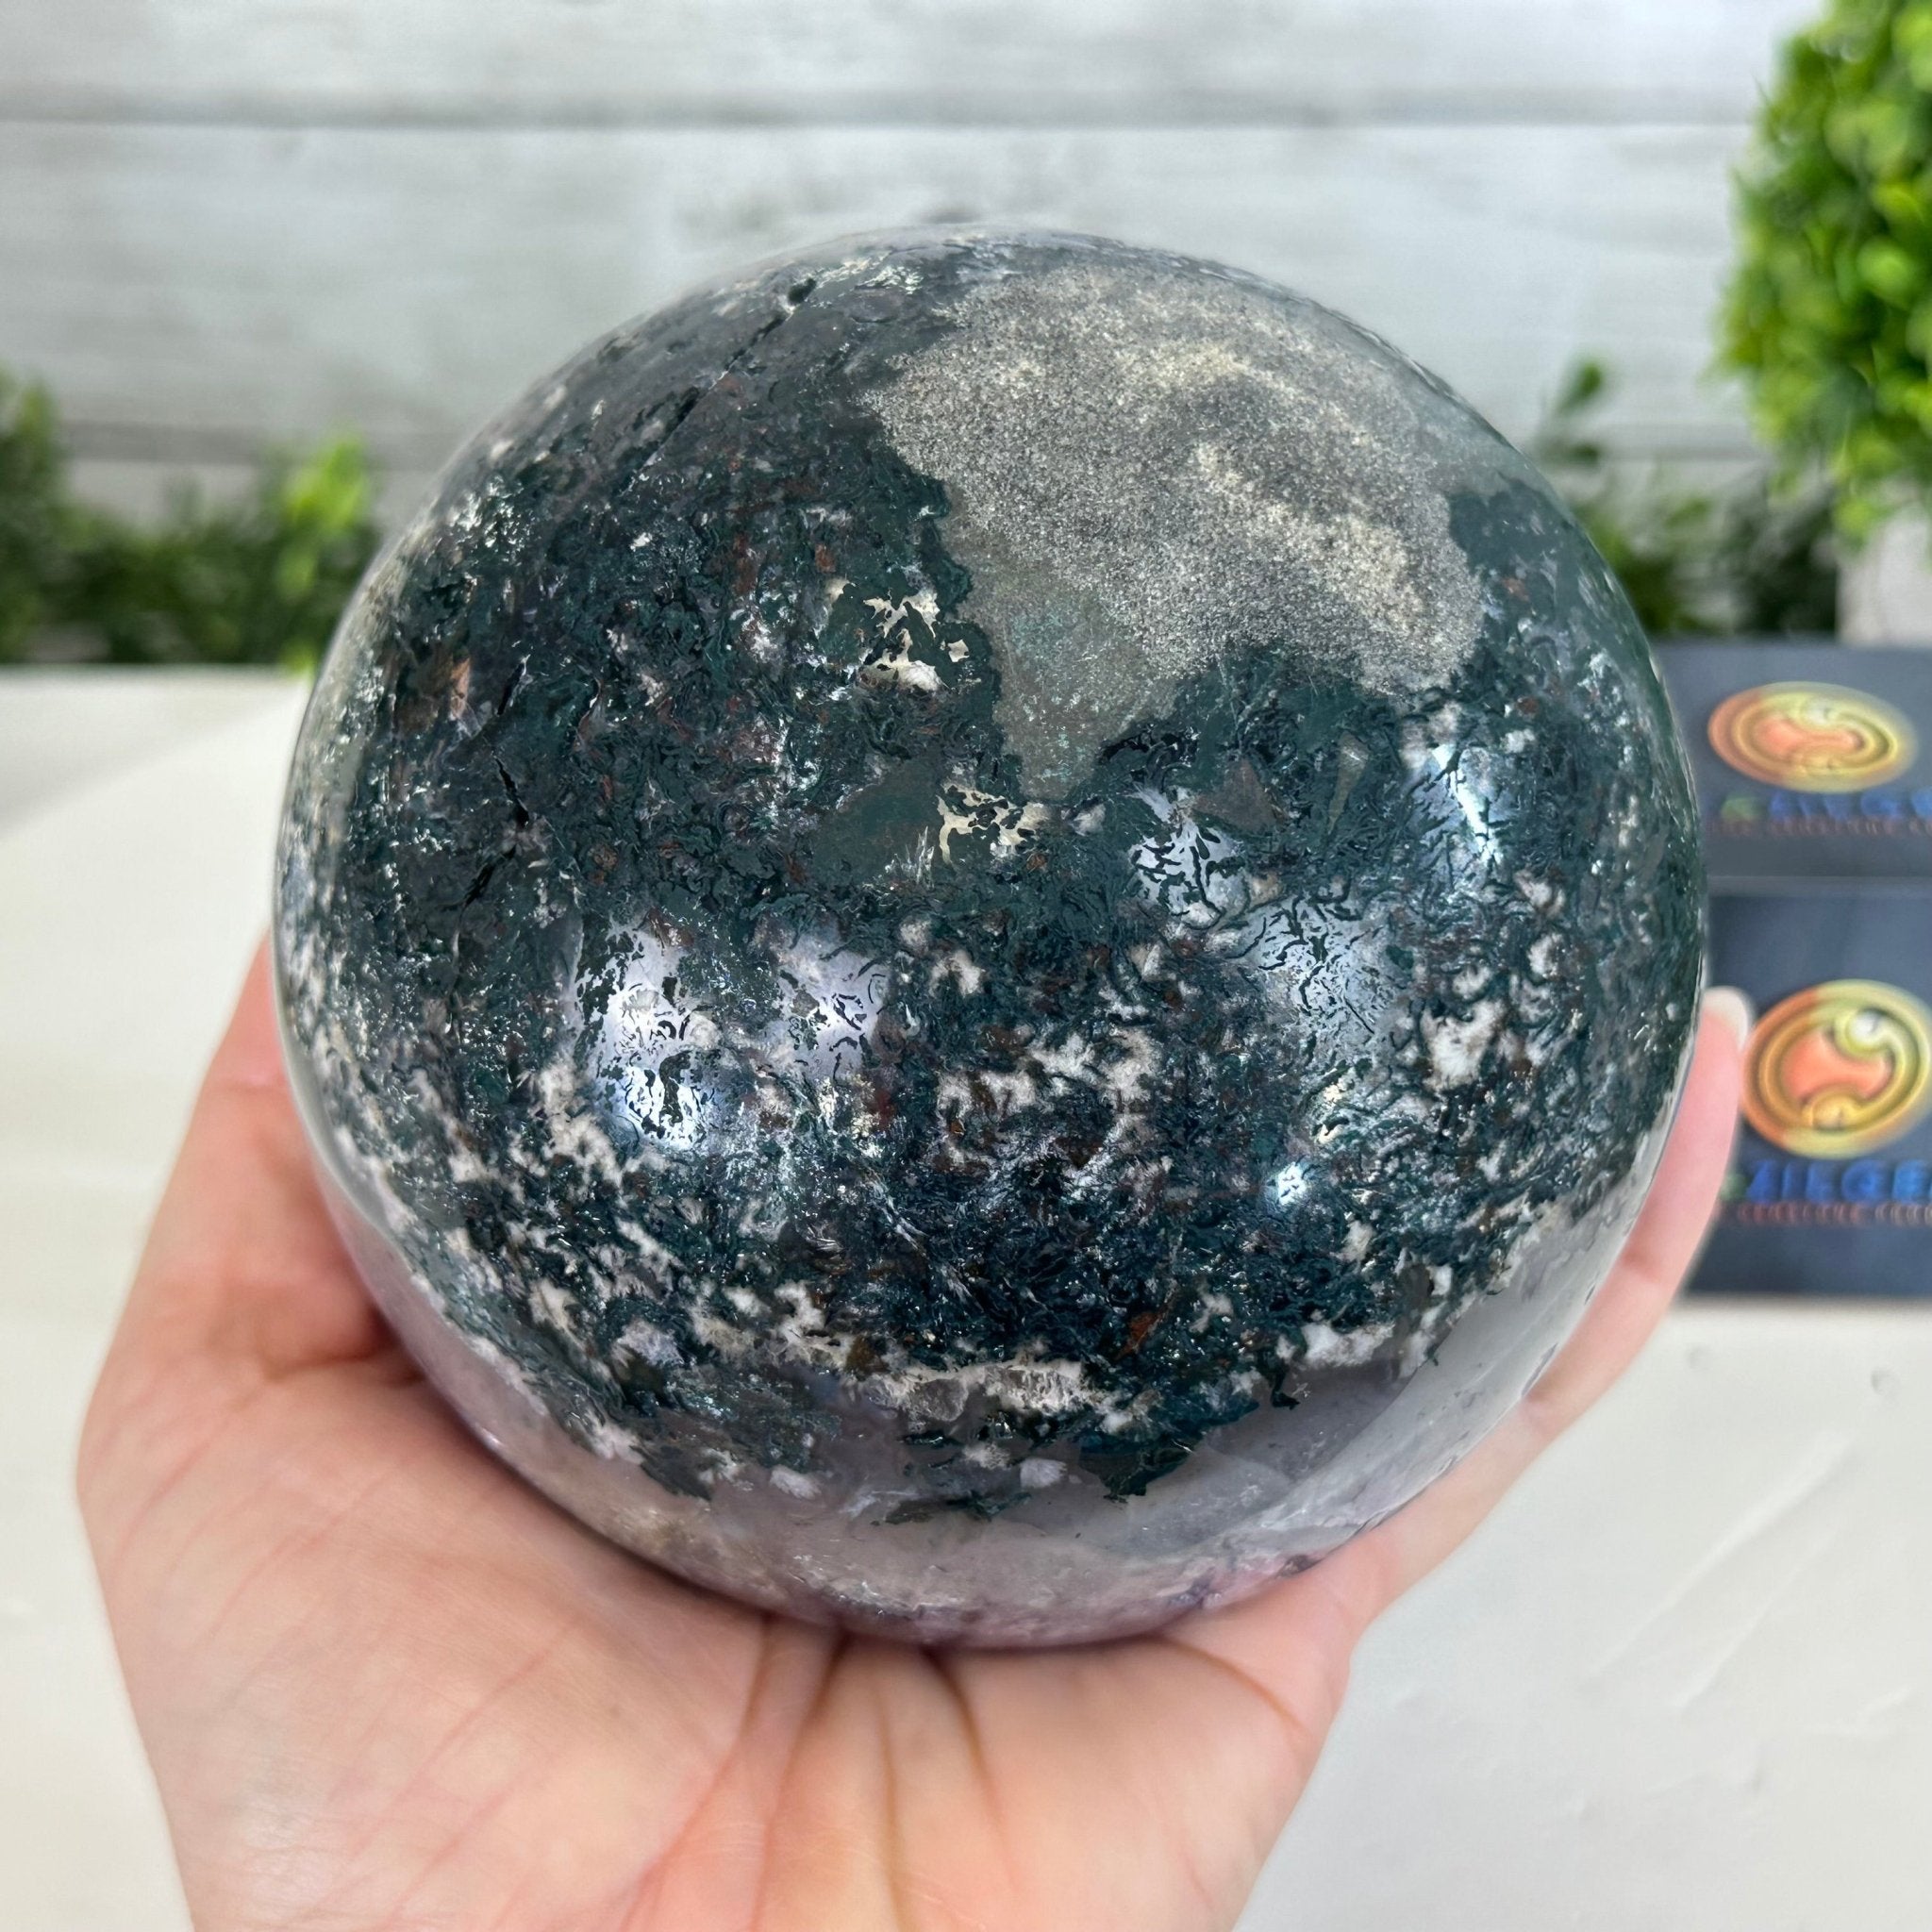 Druzy Amethyst Sphere on a Metal Stand, 3.6 lbs & 9.1" Tall #5630-0055 - Brazil GemsBrazil GemsDruzy Amethyst Sphere on a Metal Stand, 3.6 lbs & 9.1" Tall #5630-0055Spheres5630-0055